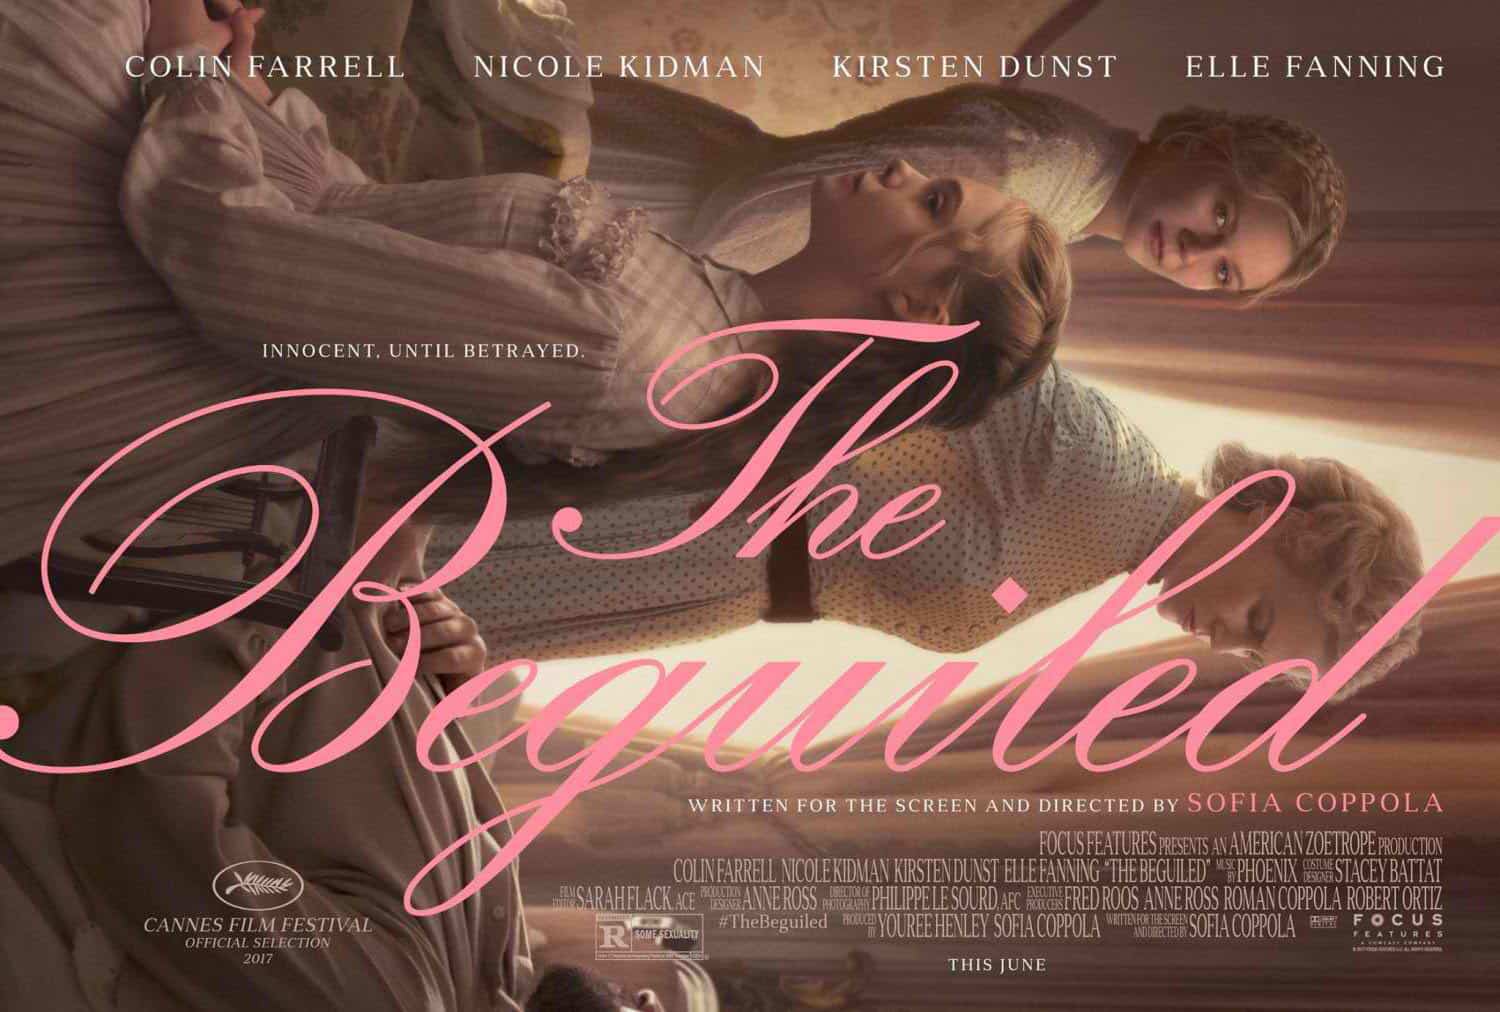 Kirsten Dunst And Elle Fanning – Shenanigans On The Set Of The Beguiled